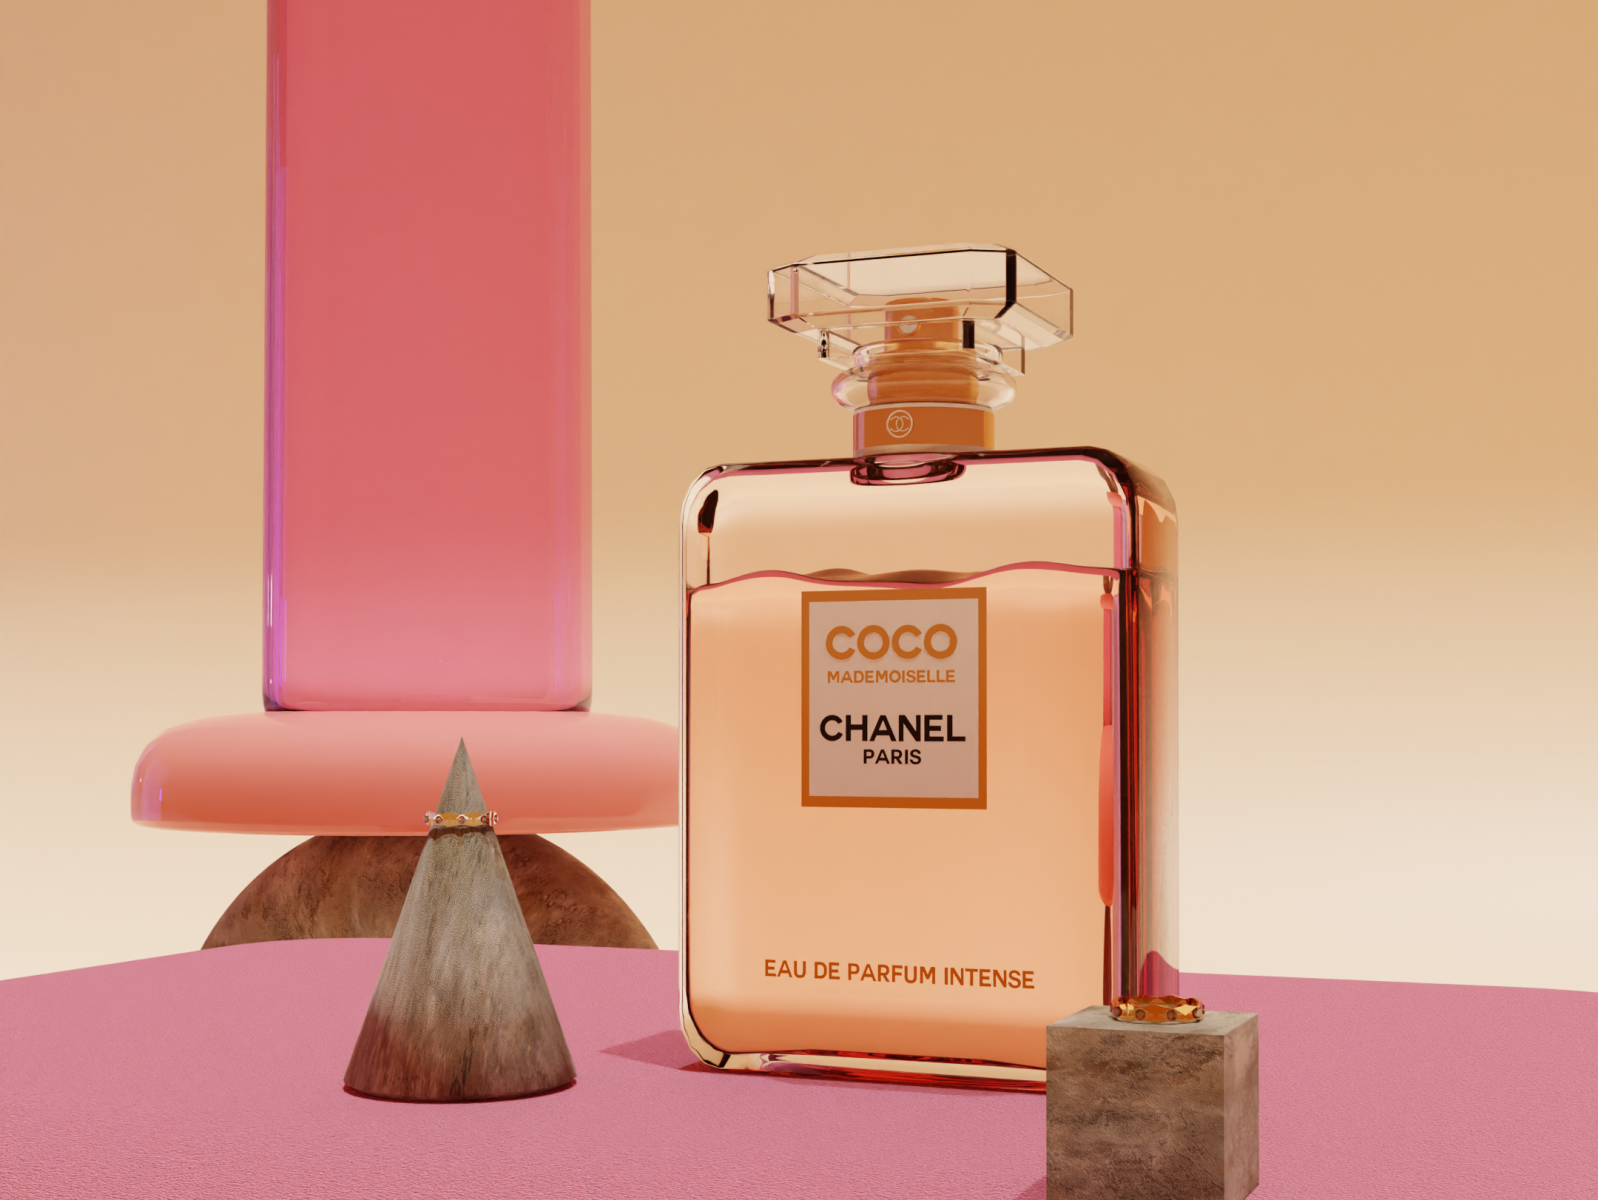 Coco Chanel PNG - Coco Chanel Logo, Coco Chanel Perfume Bottle